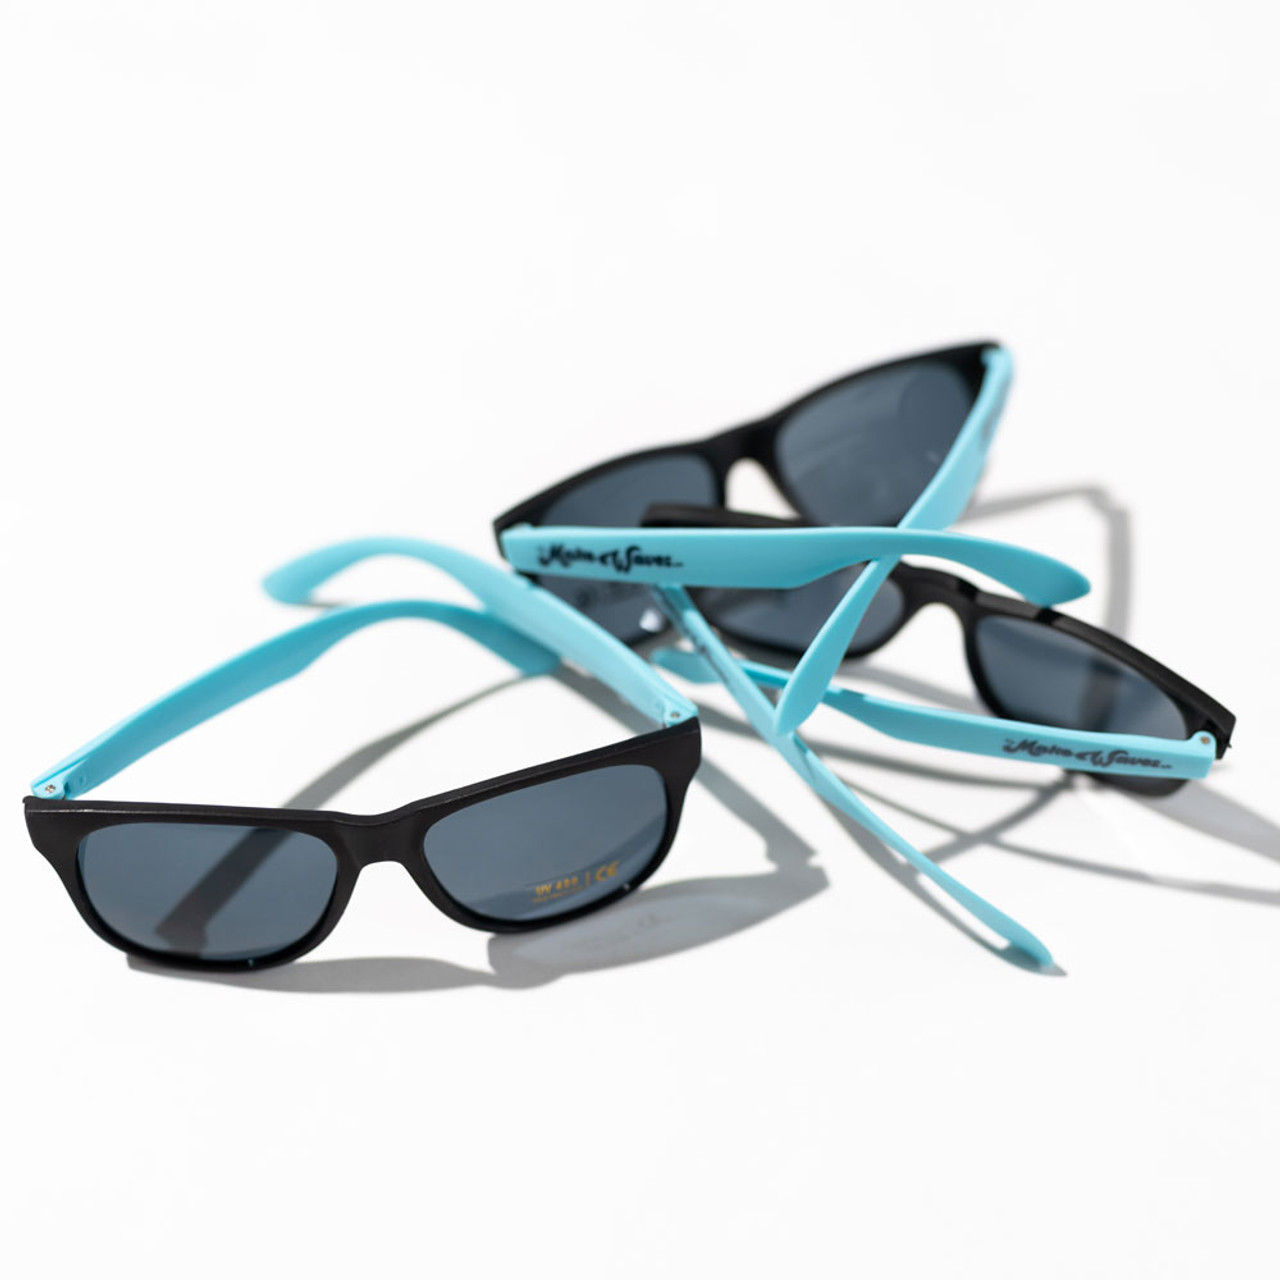 Sunglasses - Set of 12 - Make Waves VBS by Orange